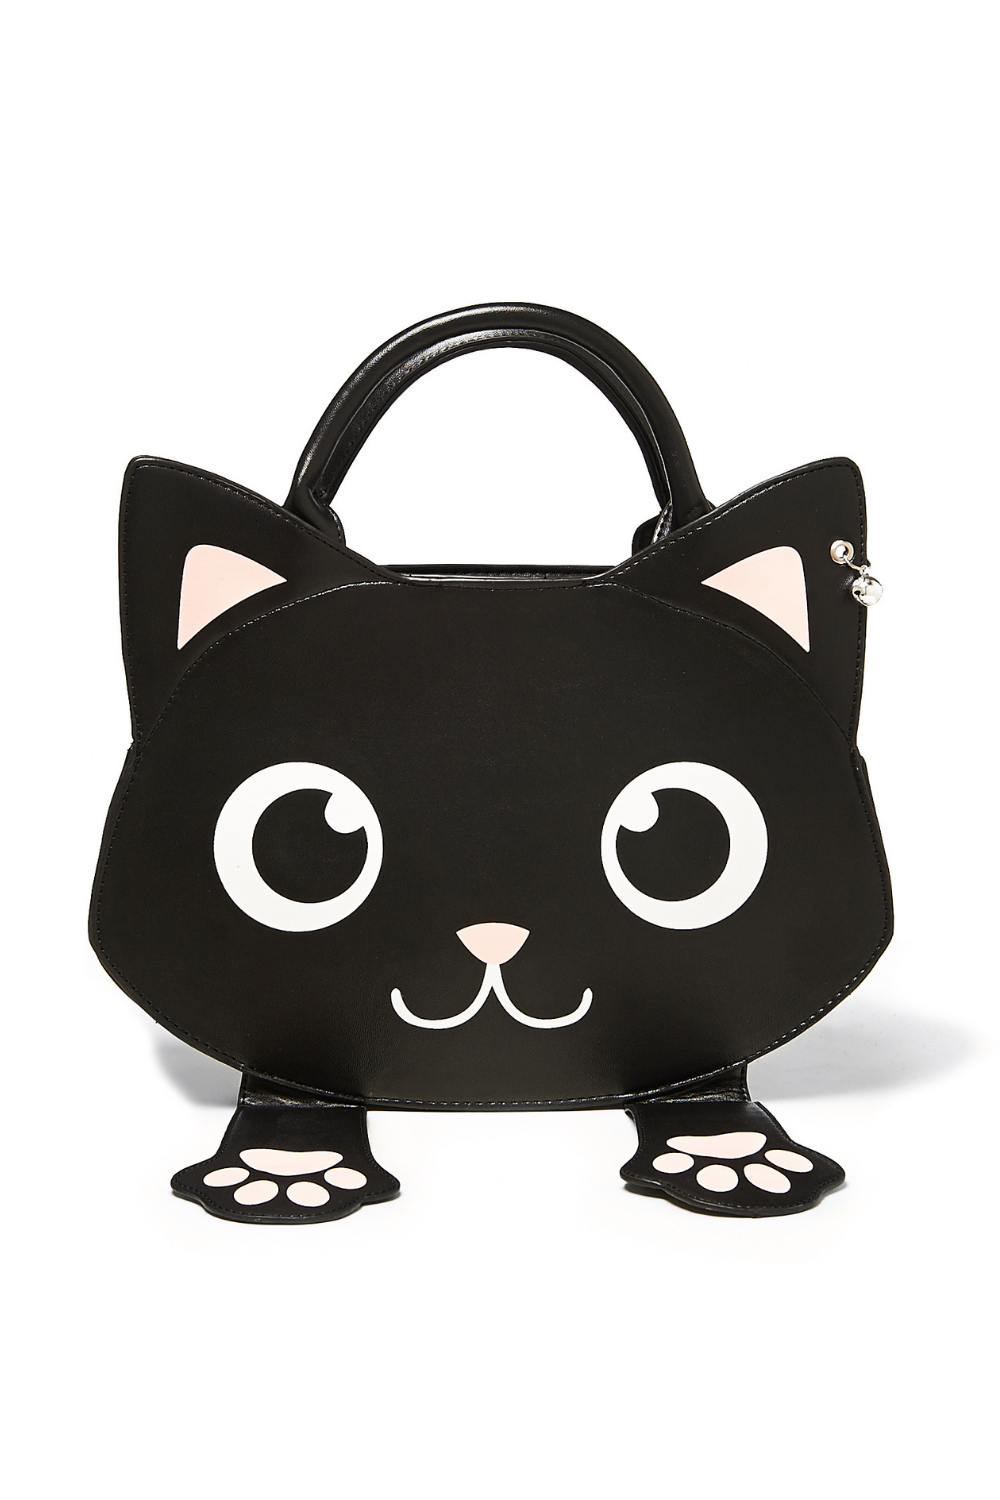 Banned Alternative Black Cat Bag Of Tricks Handbag